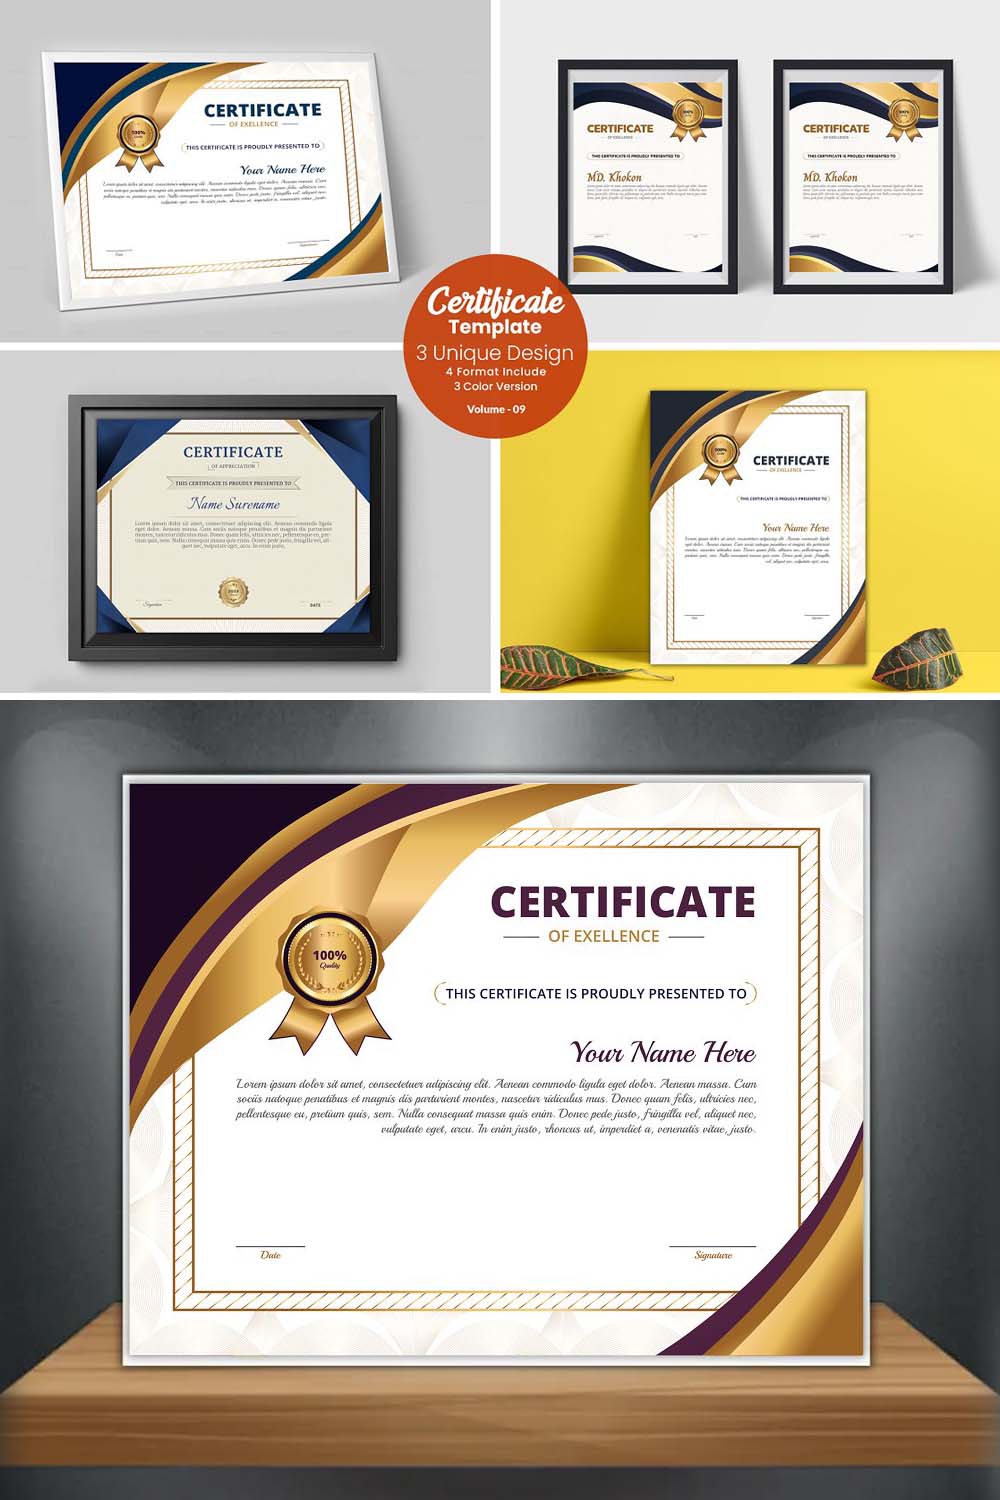 Certificate Appreciation Award pinterest preview image.